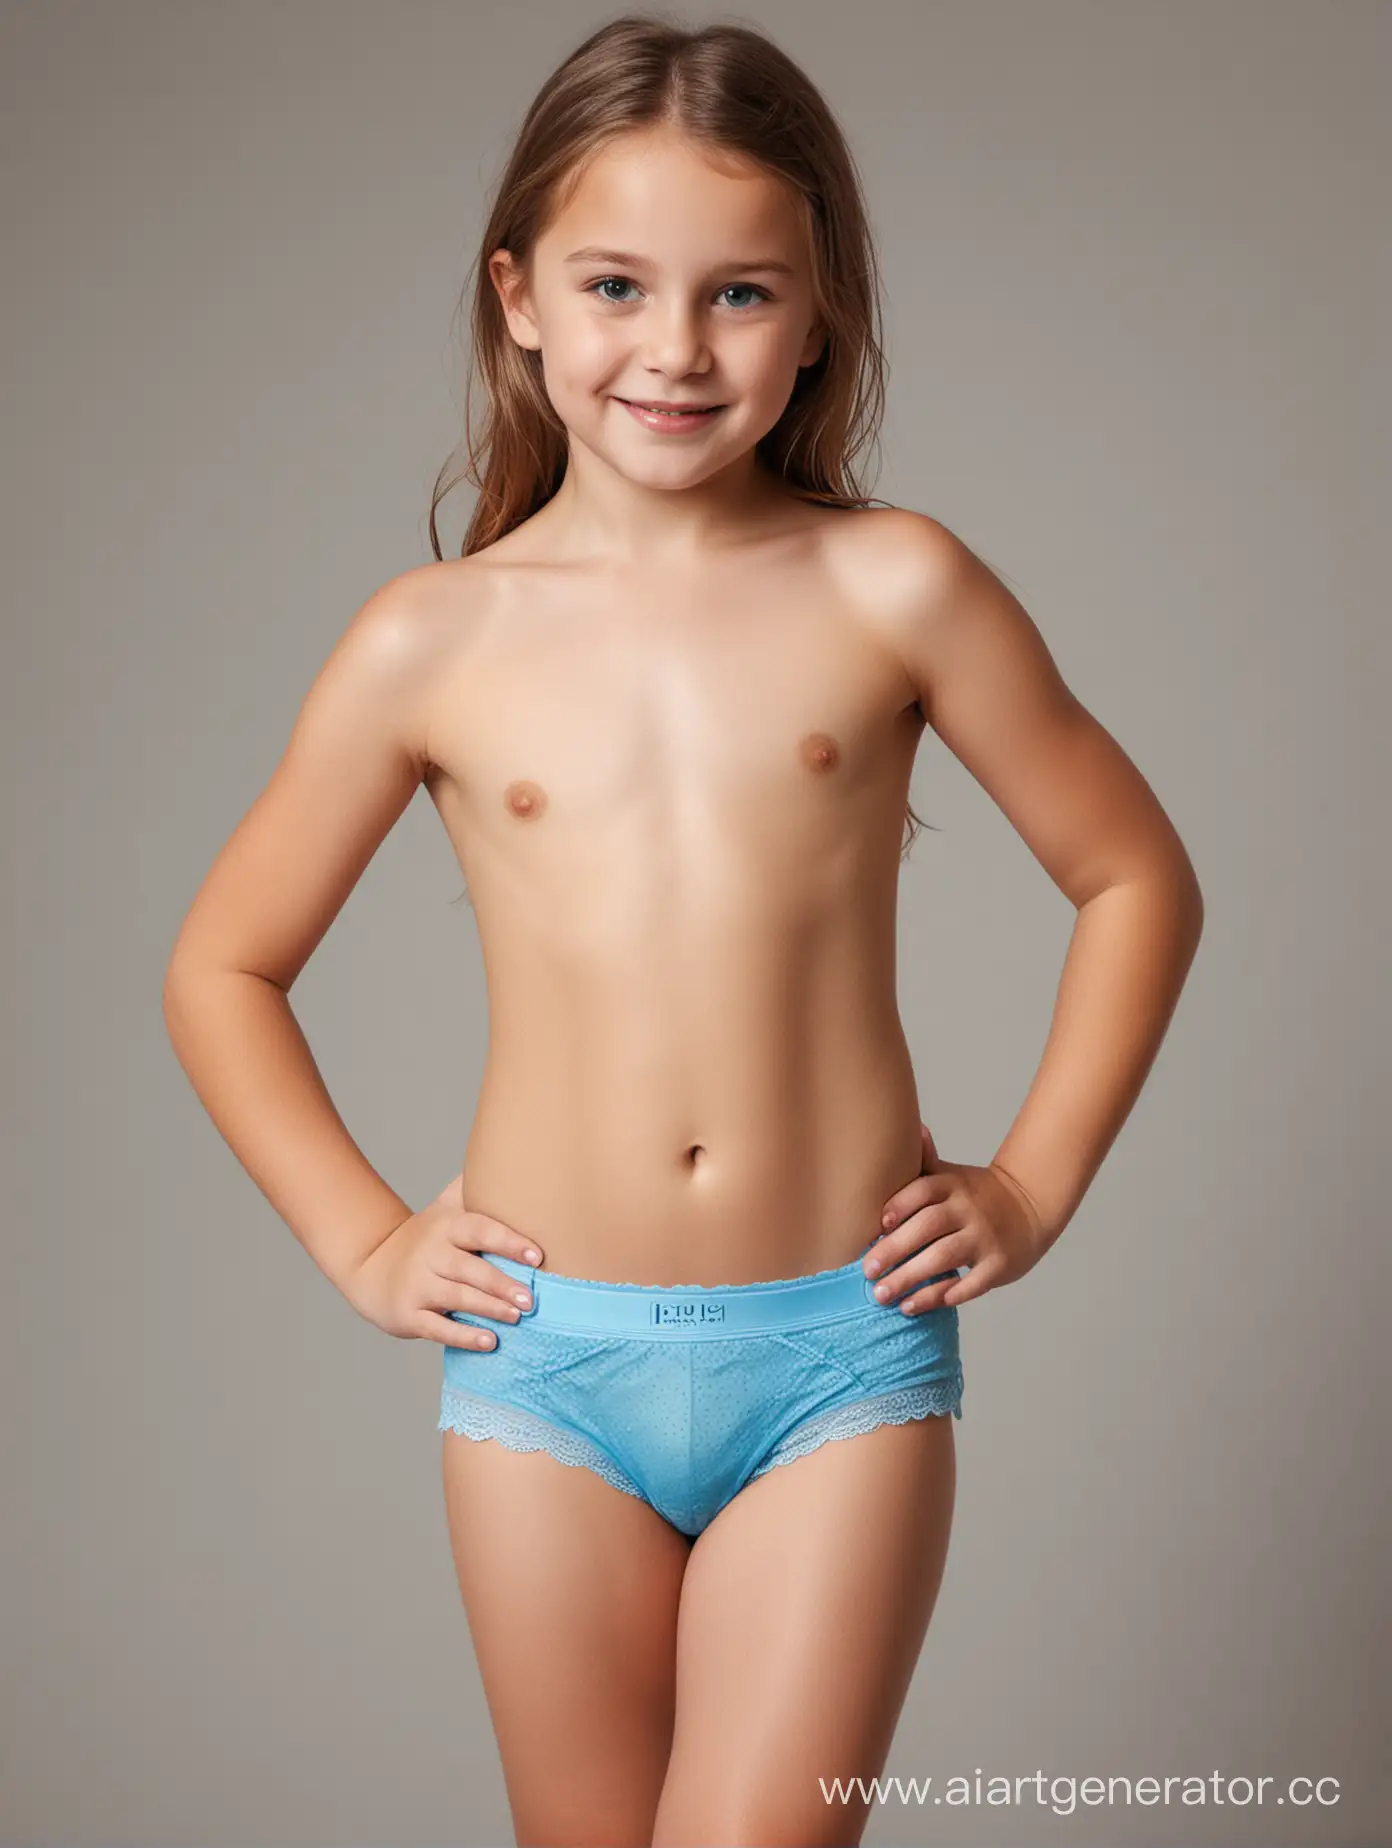 8 year old girl in blue underwear